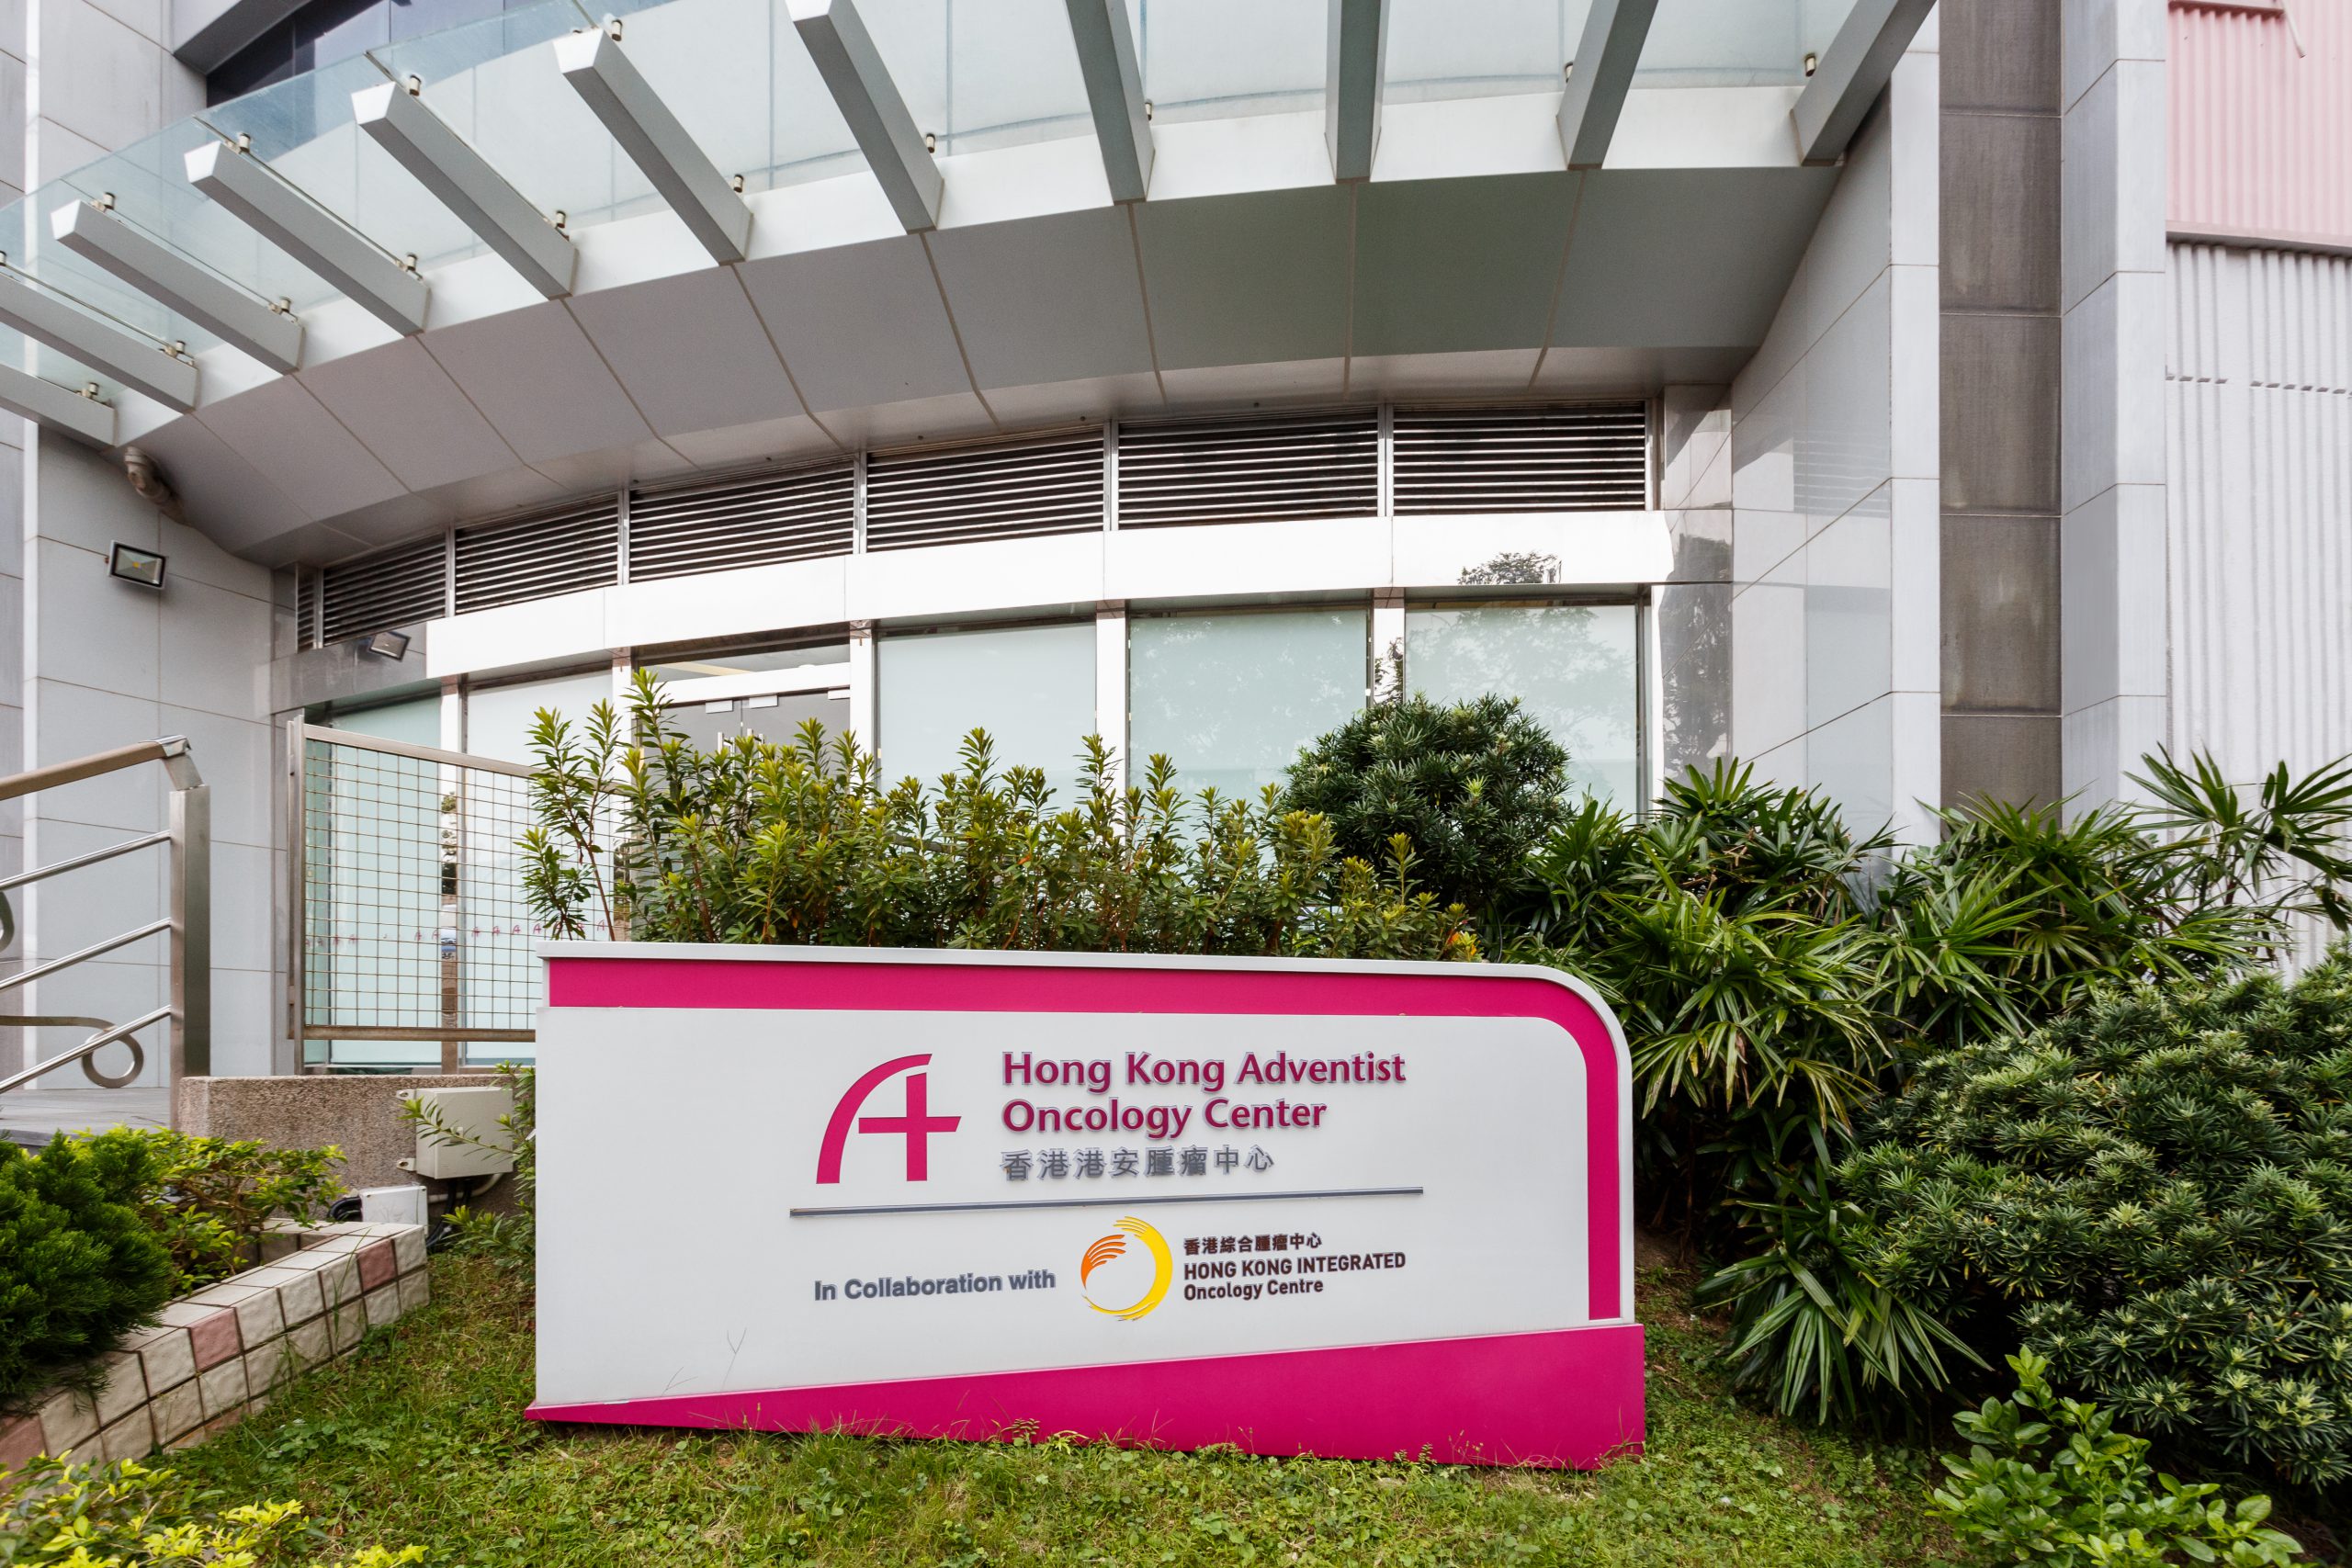 Hong Kong Adventist Hospital Oncology Center